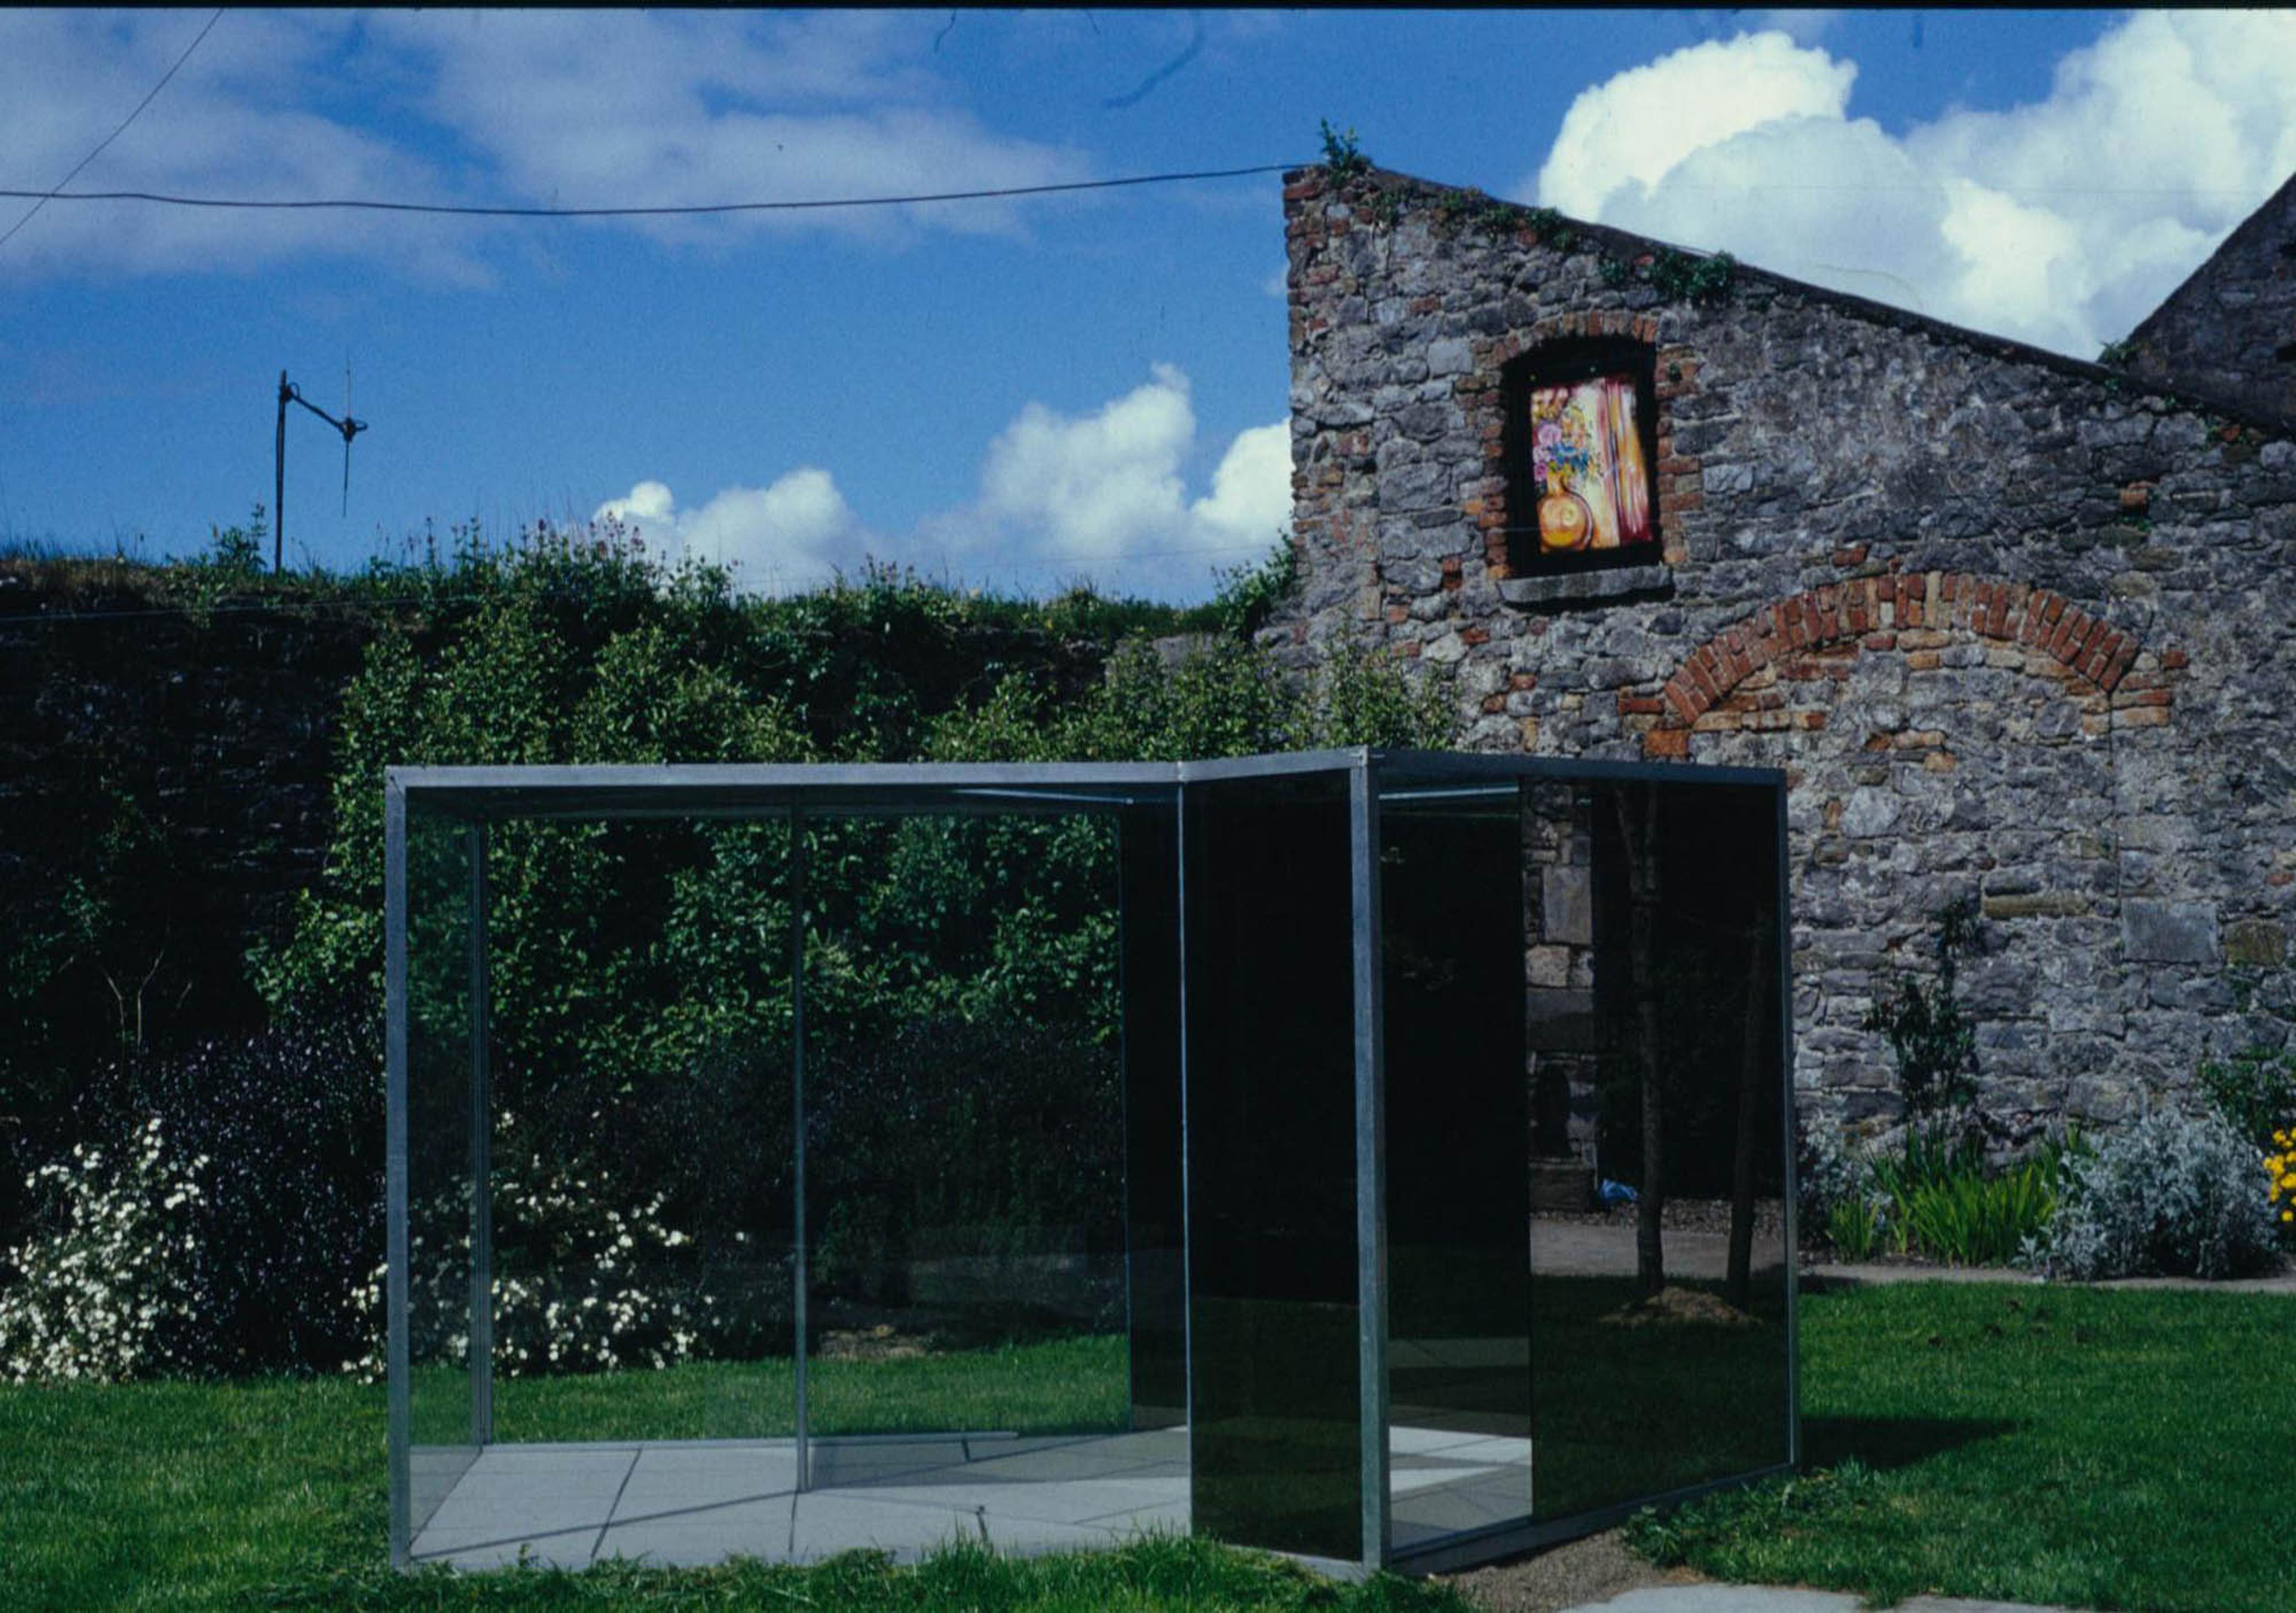 (1994) Dan Graham, Childrens Pavilion, 1986, glass, aluminium and blue stone.